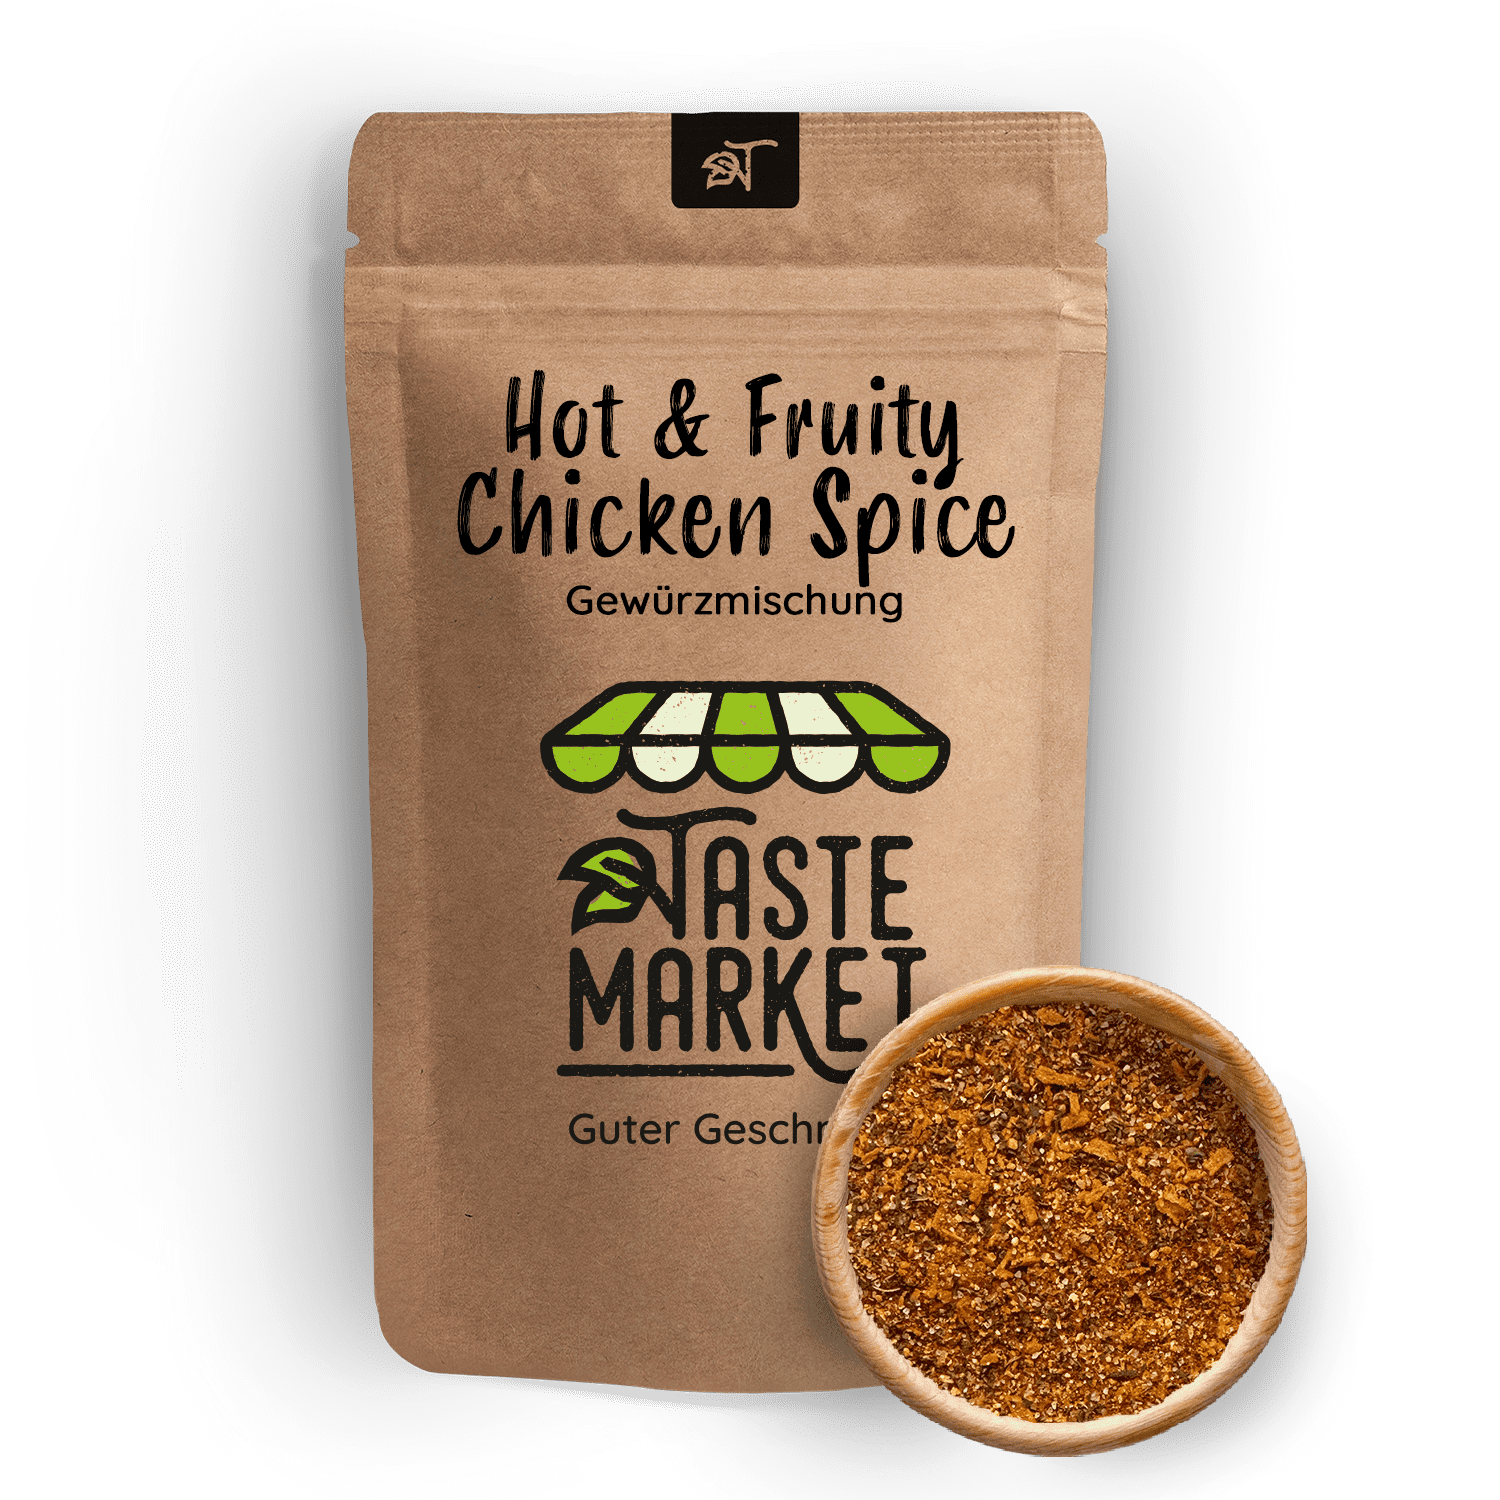 Hot & Fruity Chicken Spice